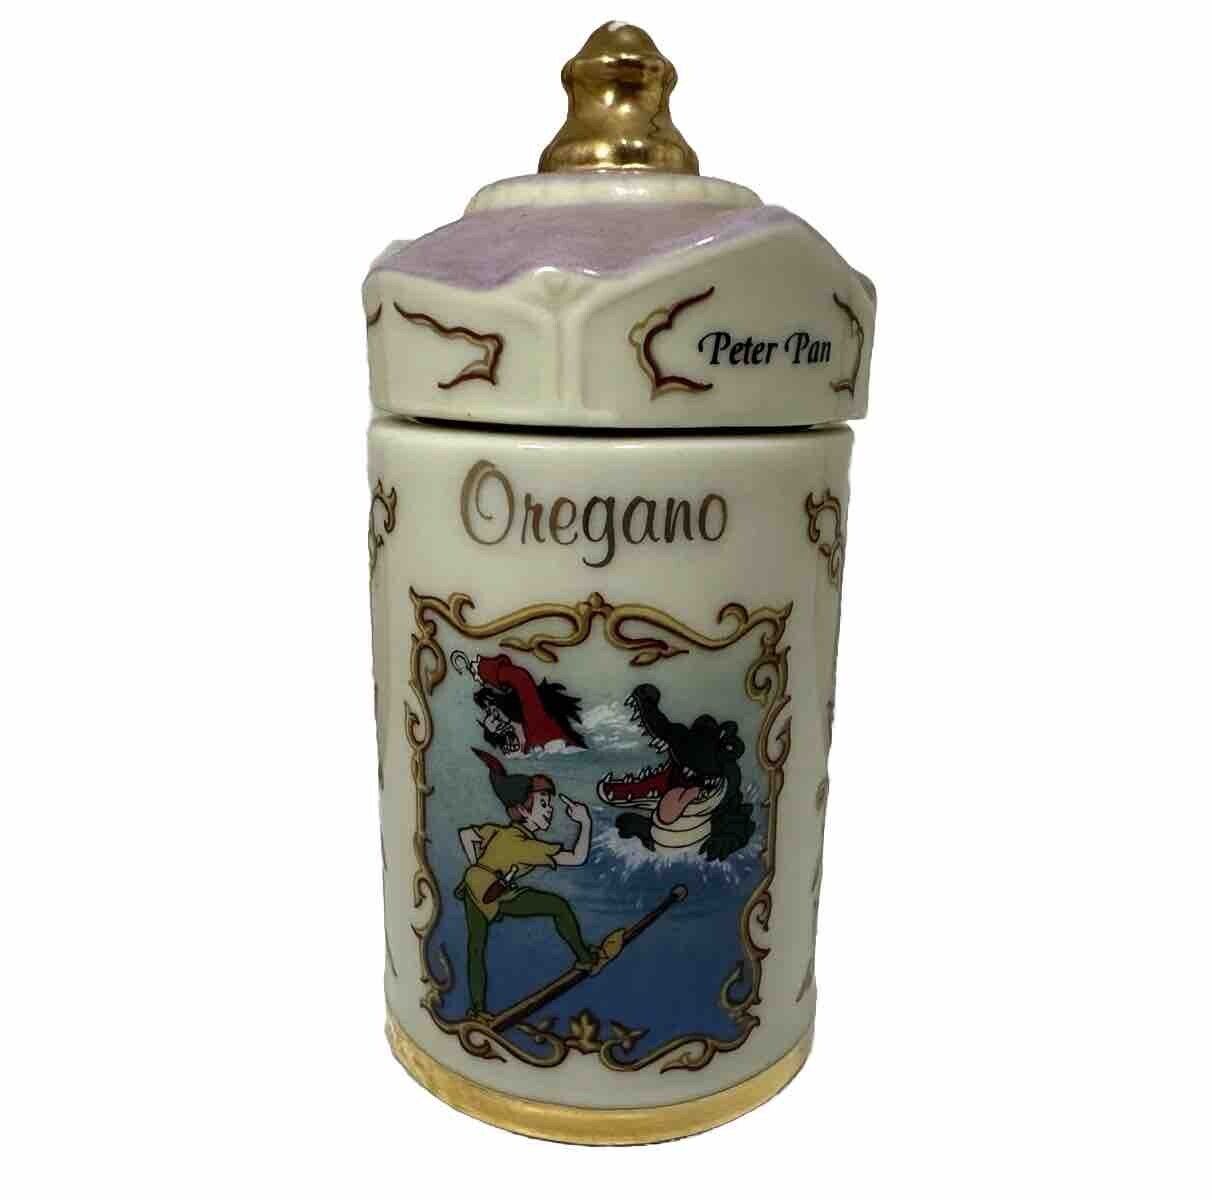 Vintage Walt Disney Lenox Spice Jar Collection - Oregano-Peter Pan - 1995